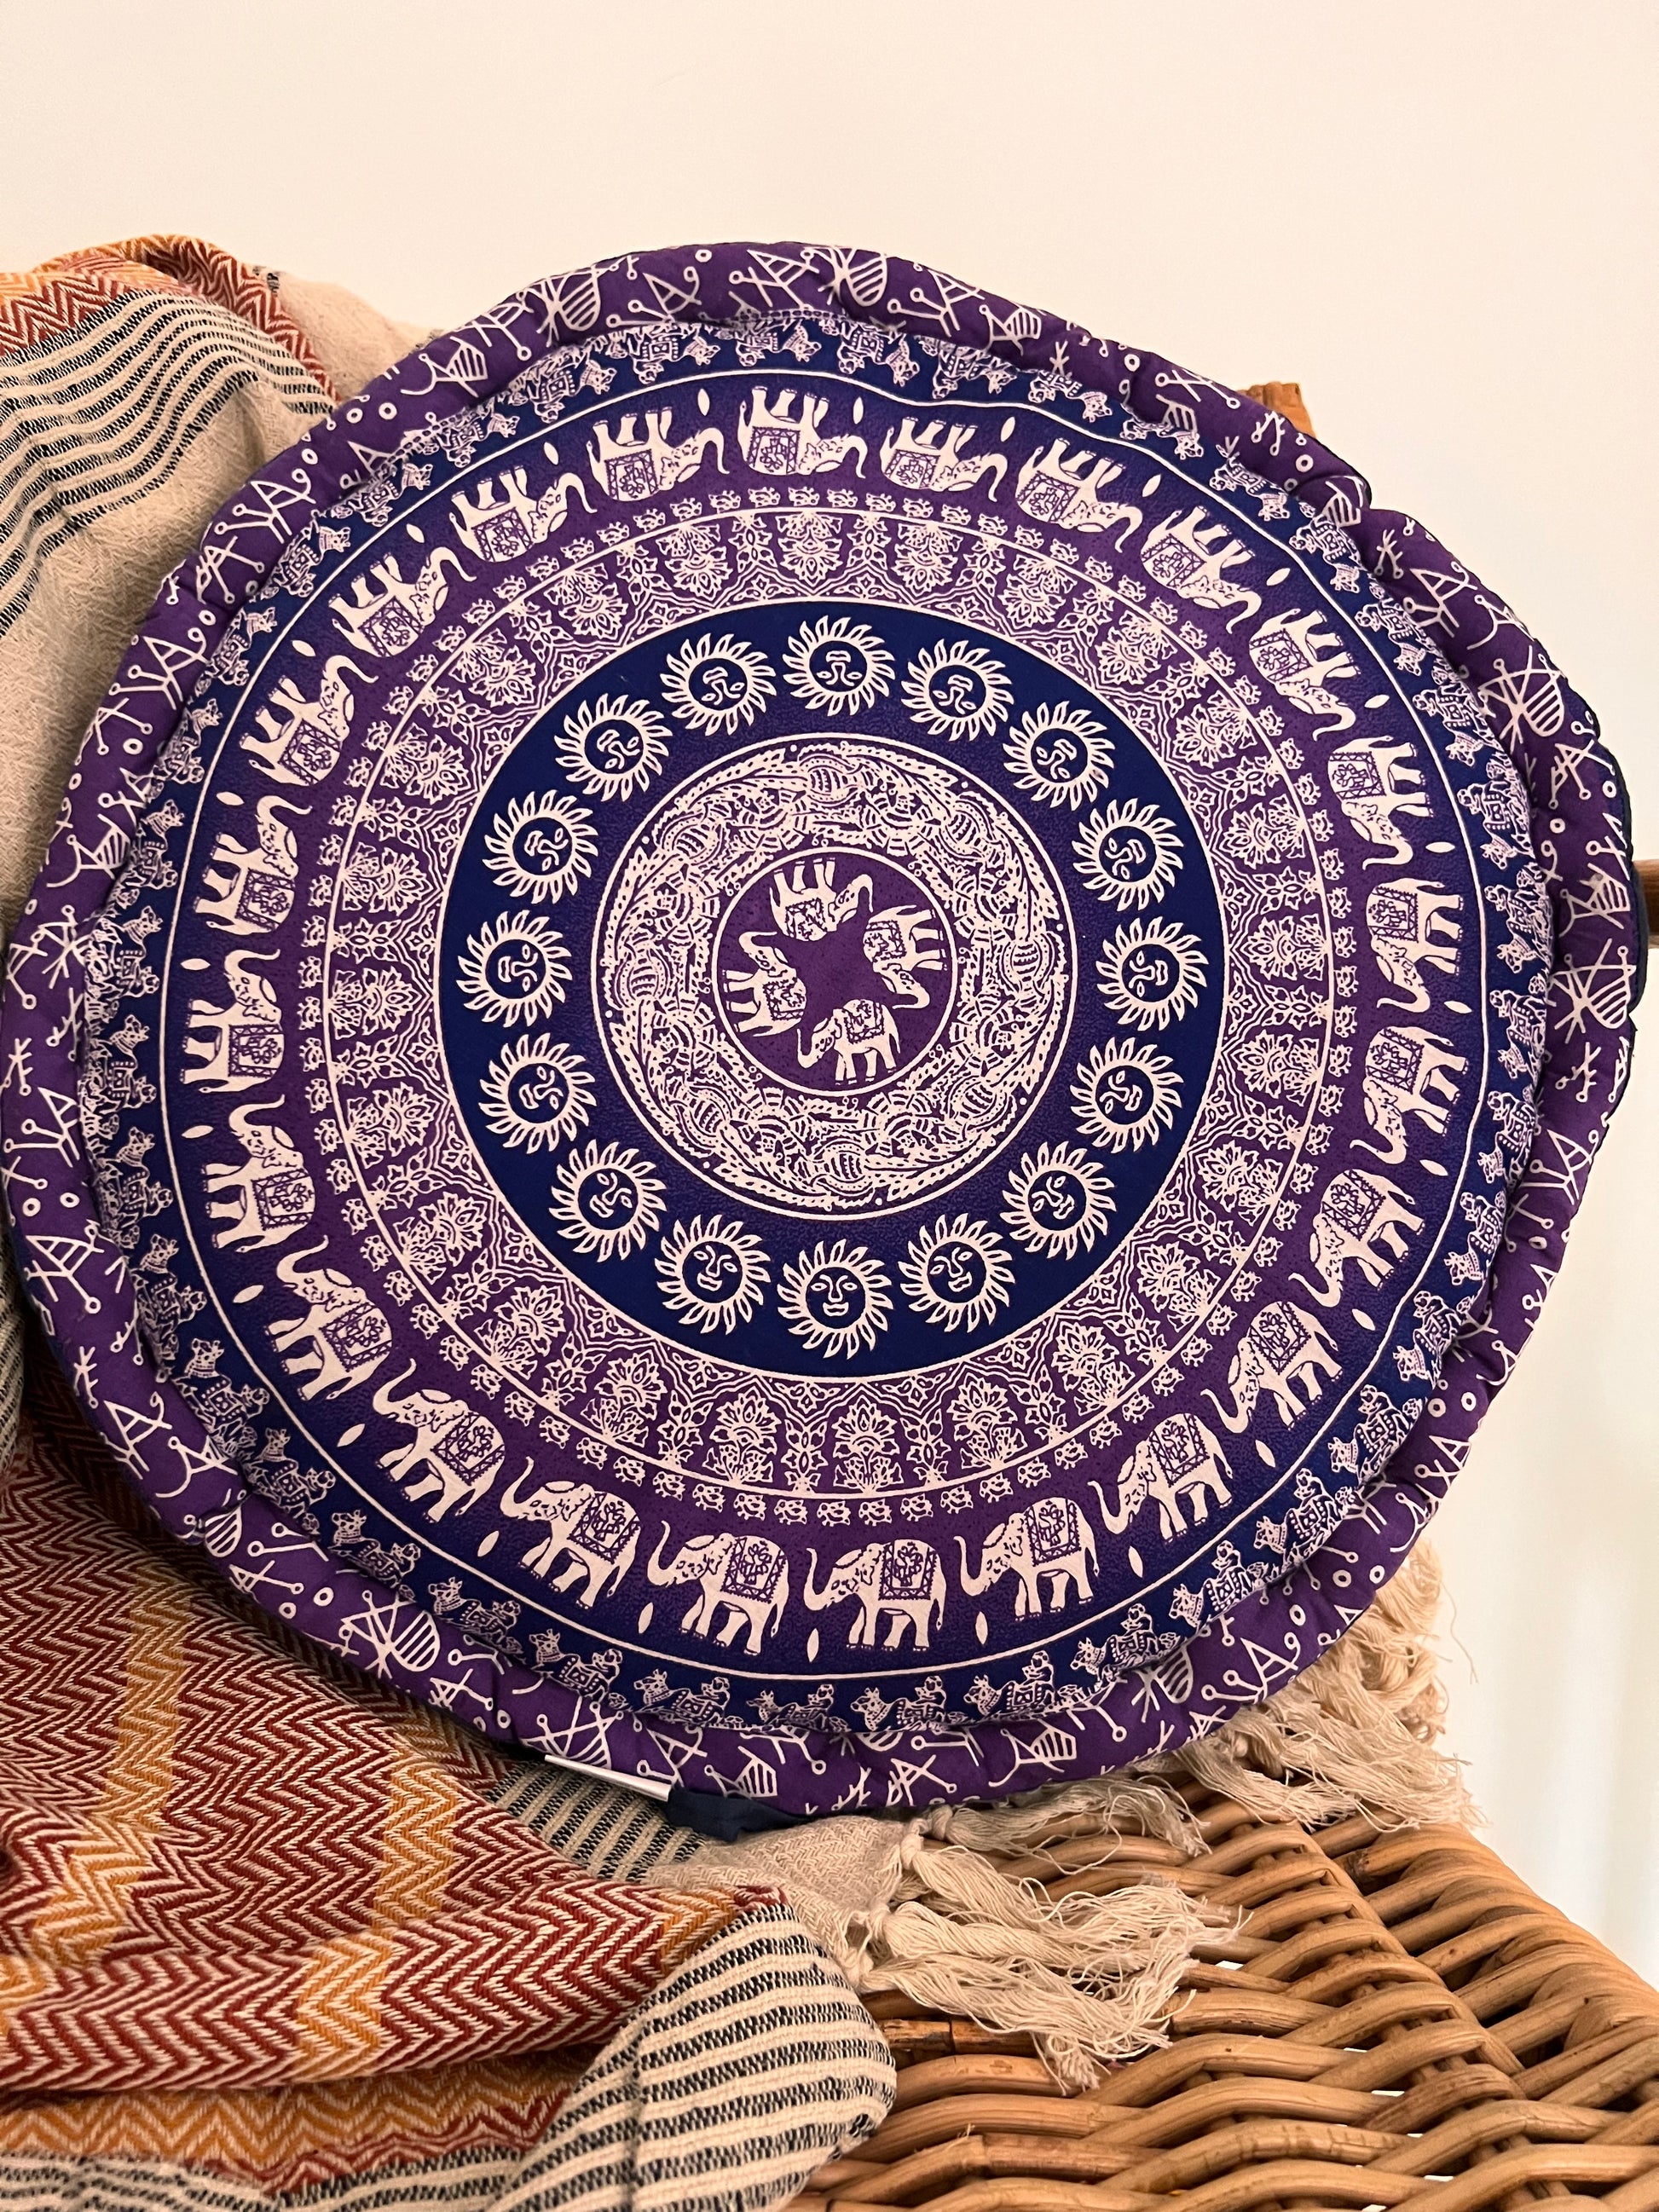 Handmade, Fair Trade, Large Yoga, Floor Cushion, Mandala Elephant Print., Purple